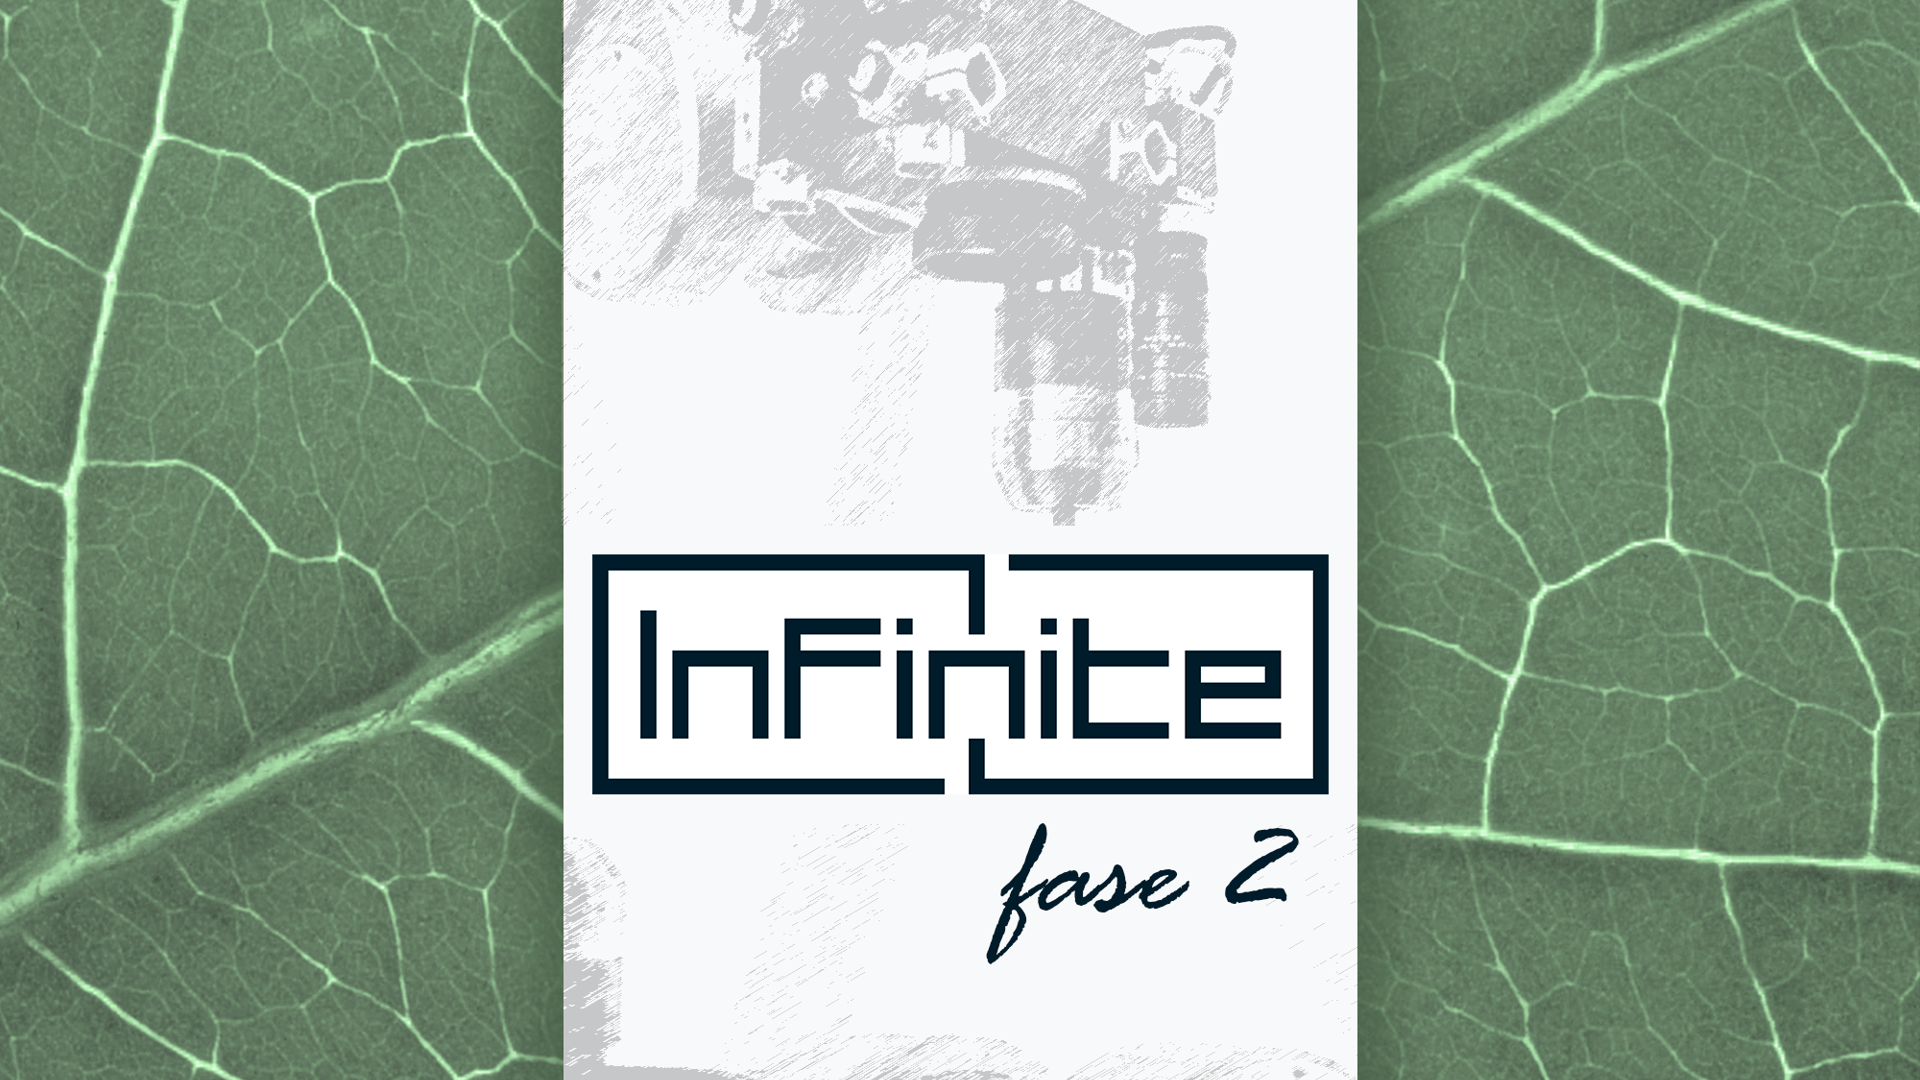 Infinite - Fase 2